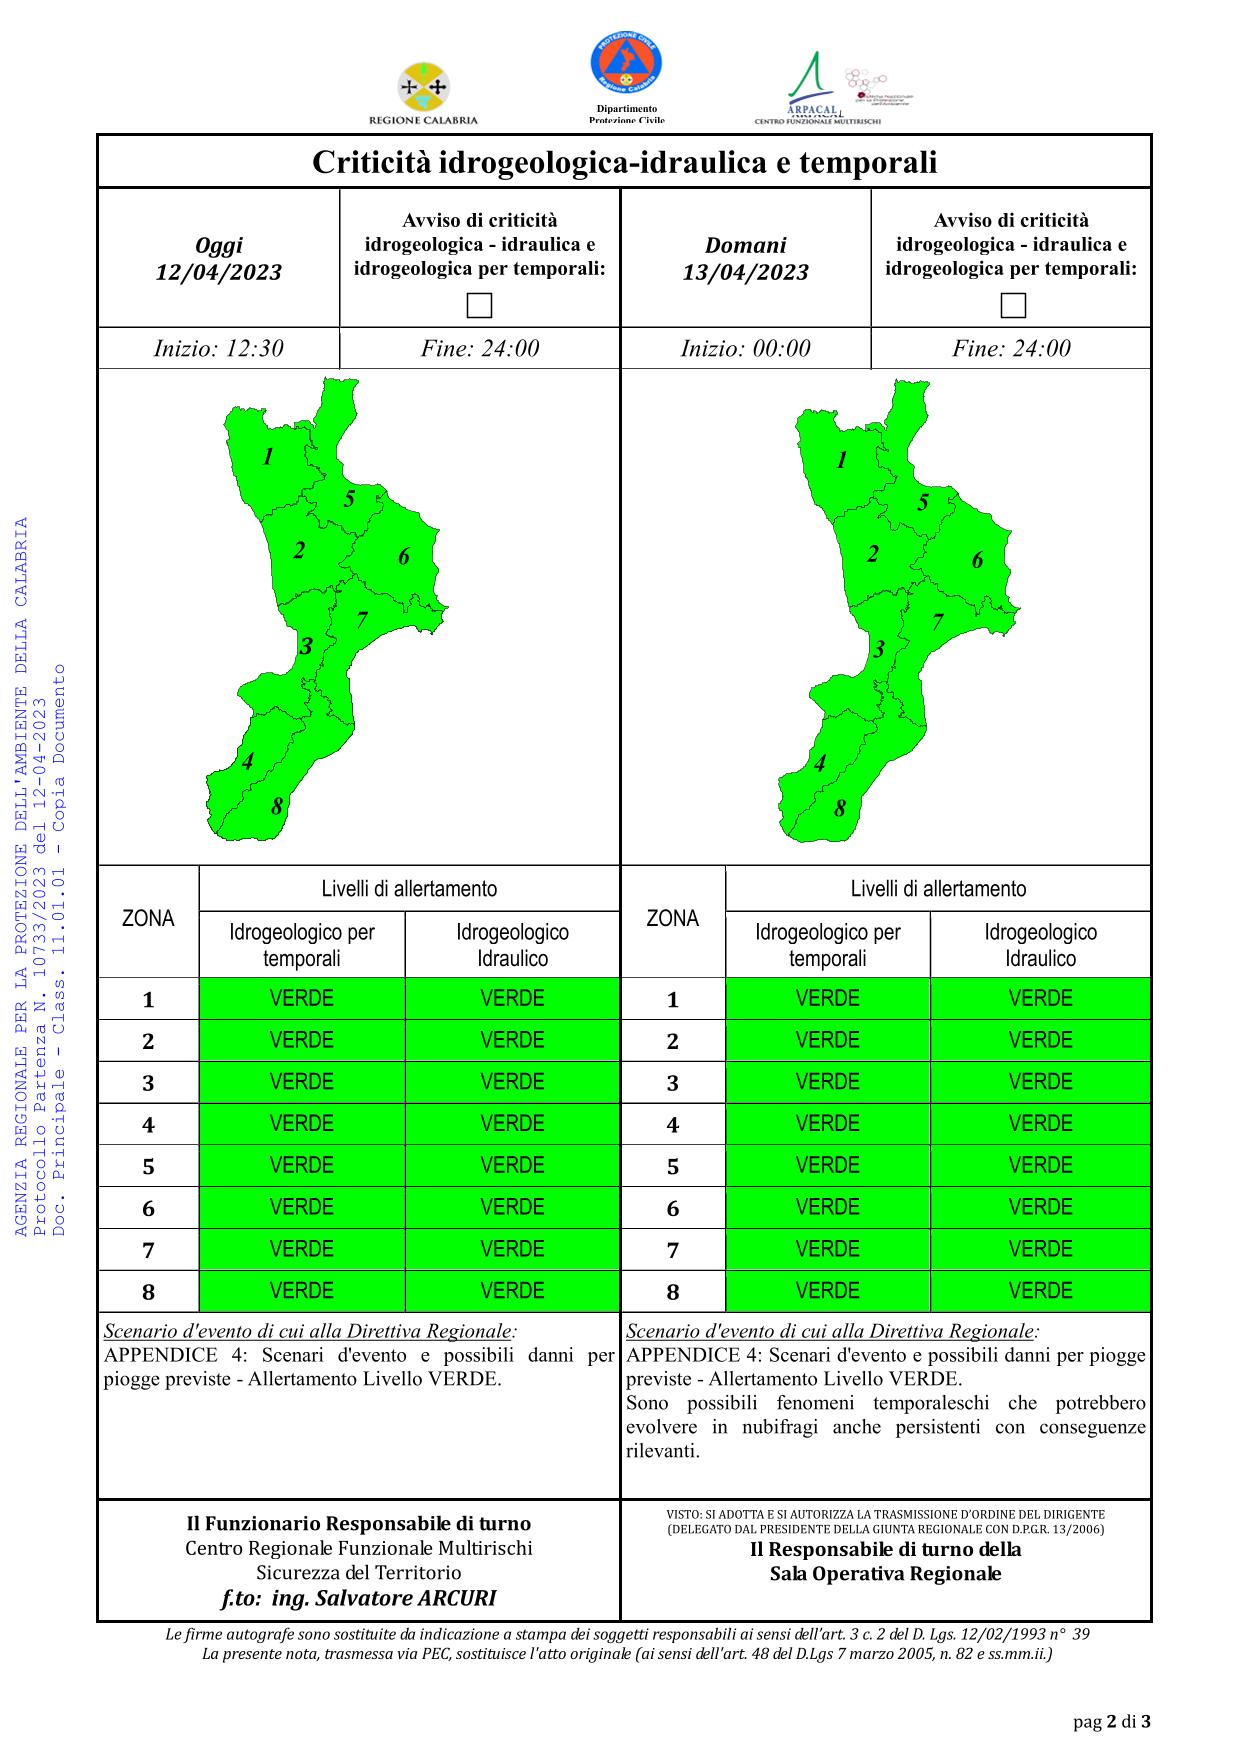 Criticità idrogeologica-idraulica e temporali in Calabria 12-04-2023